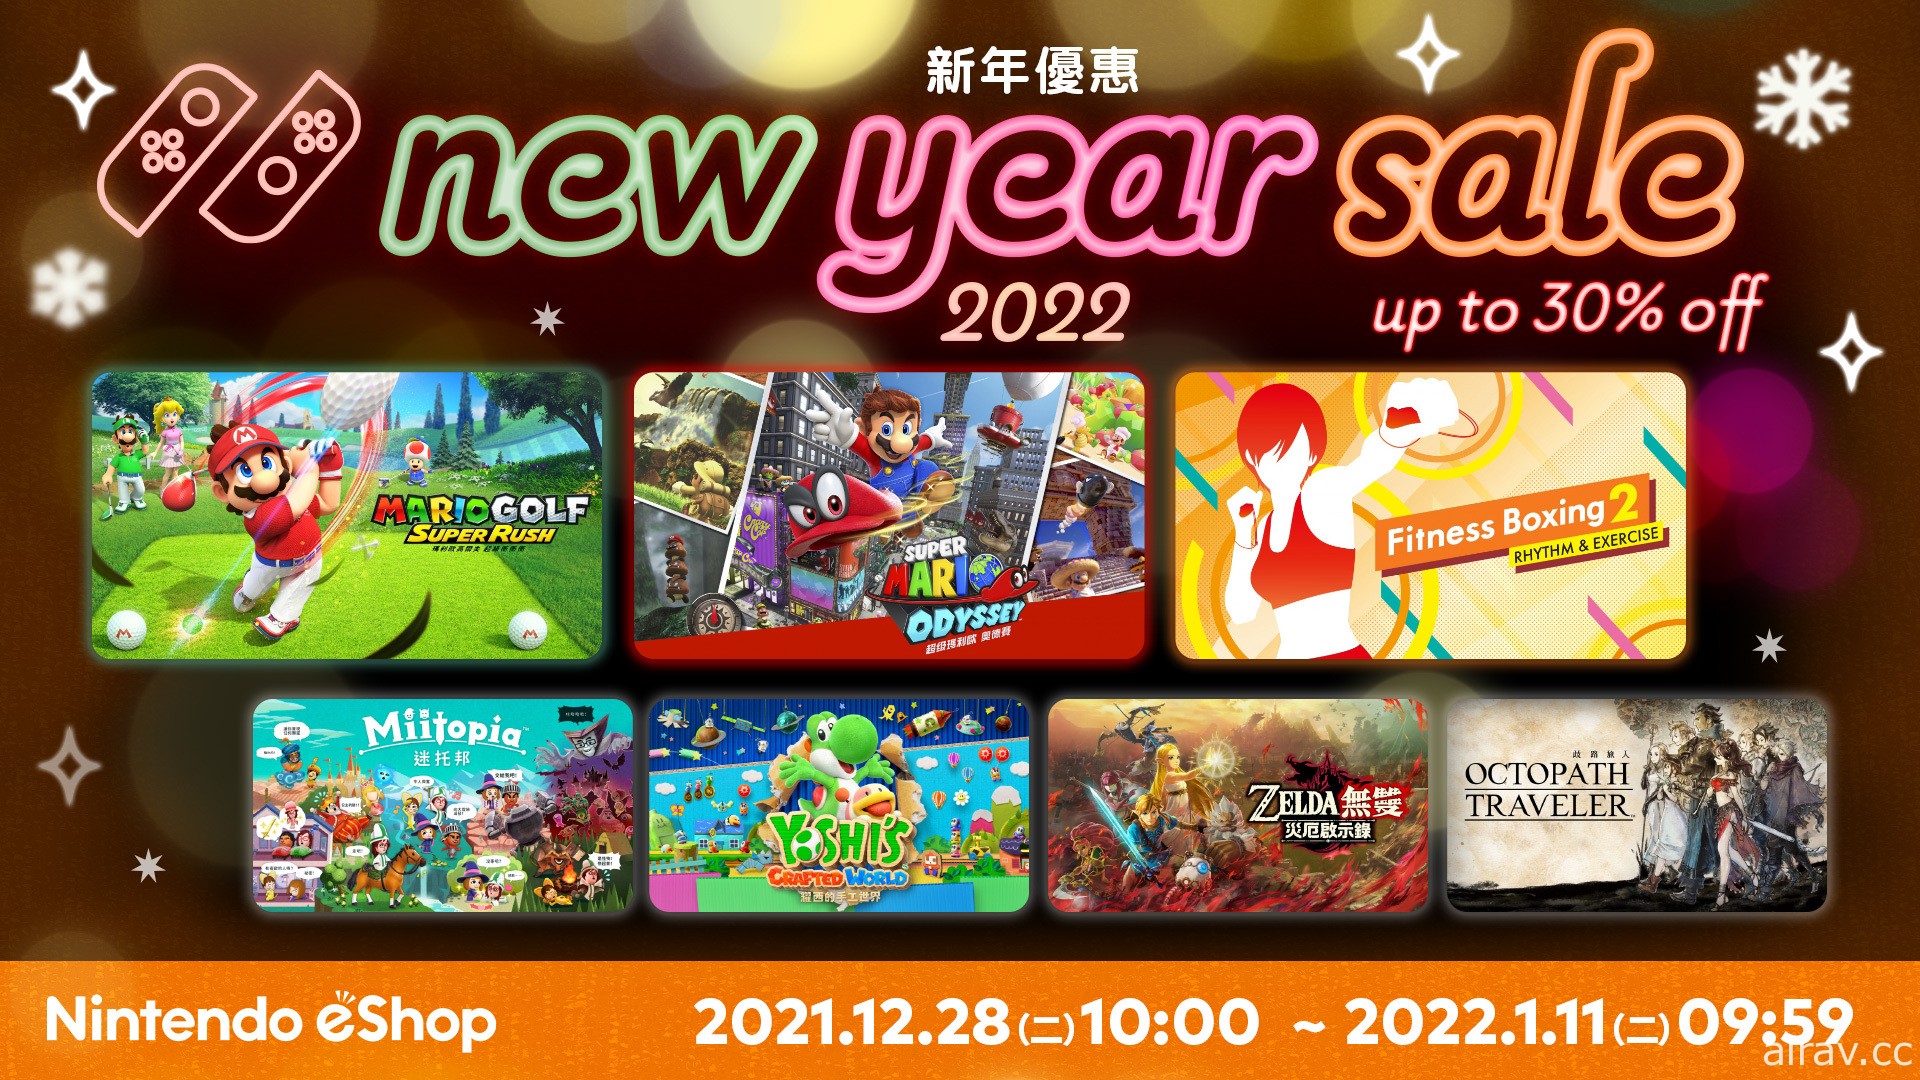 Nintendo eShop「新年優惠 2022」現已開跑 精選遊戲介紹